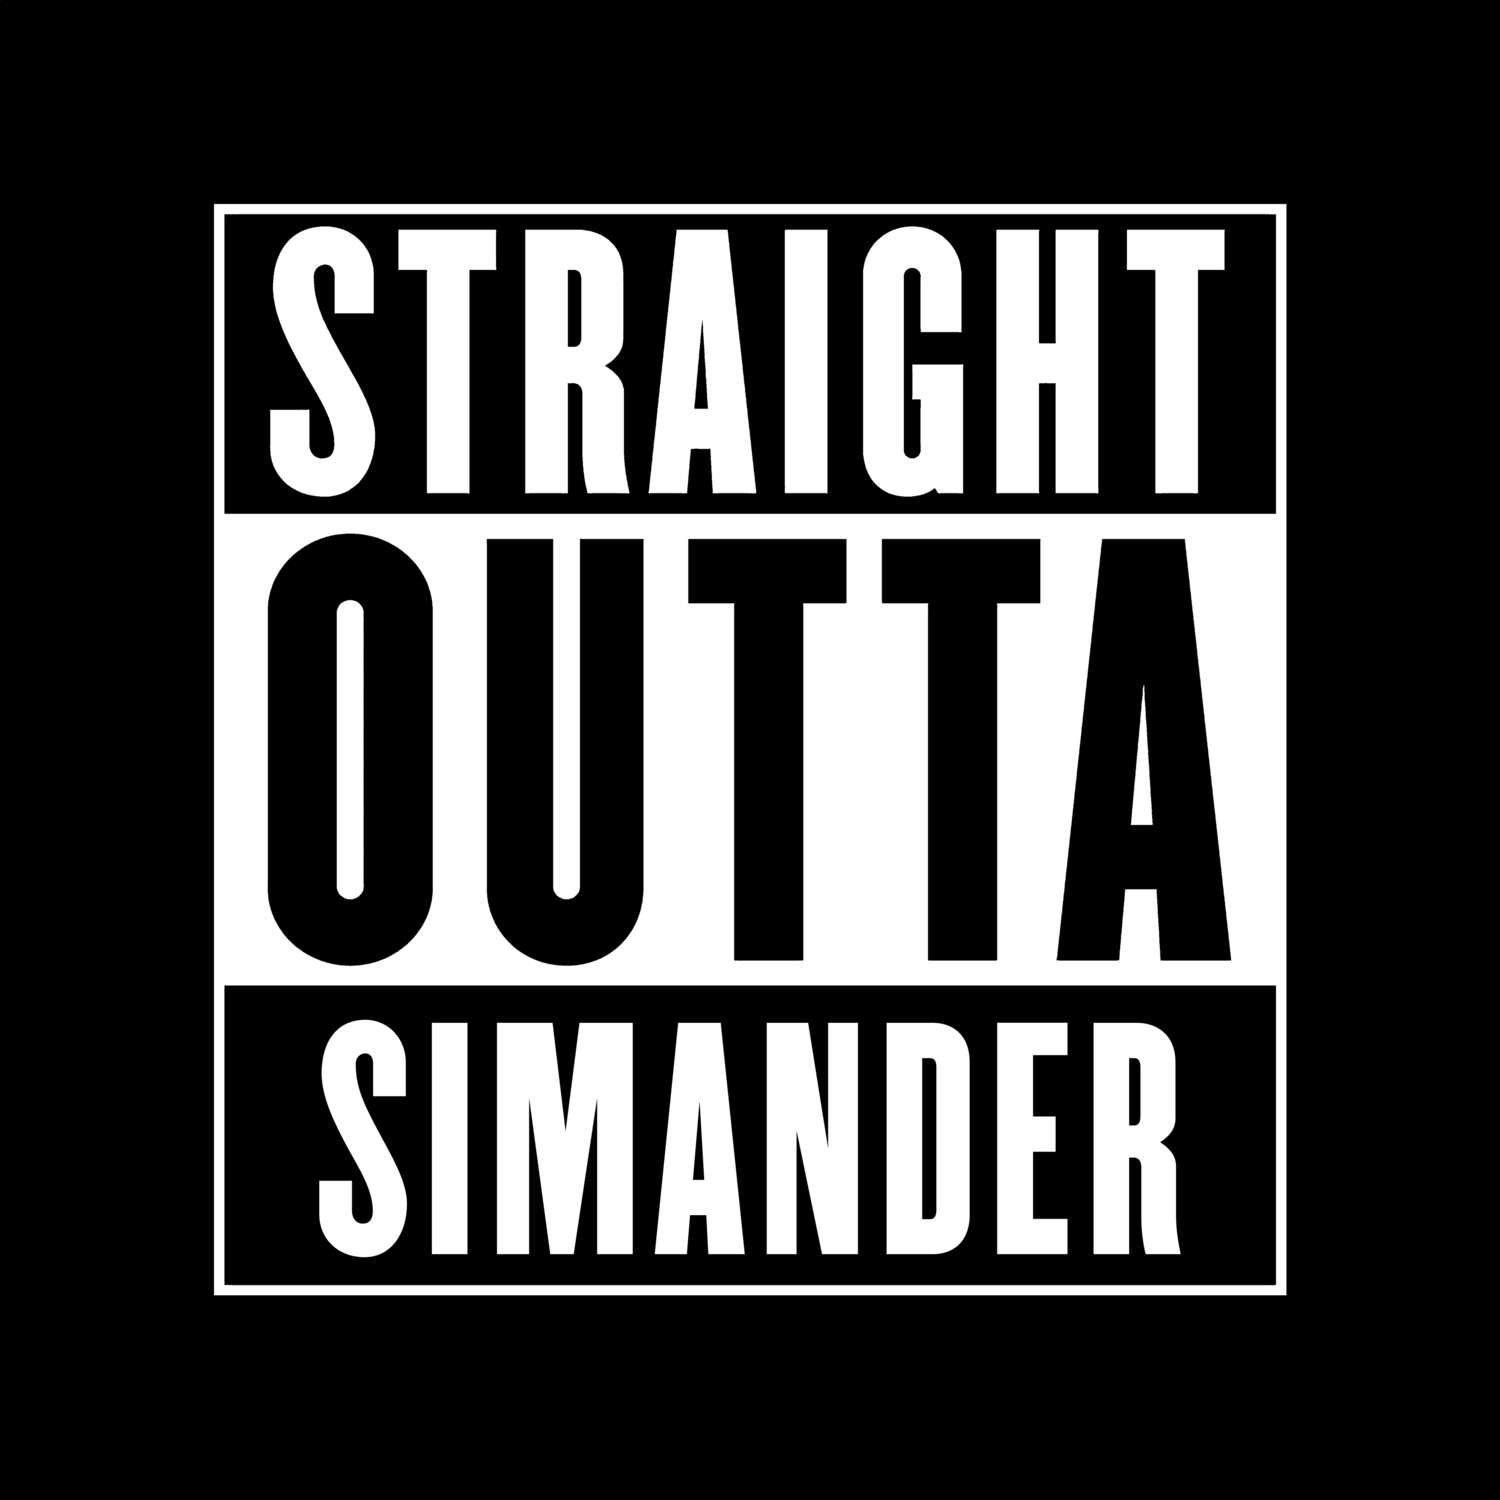 Simander T-Shirt »Straight Outta«